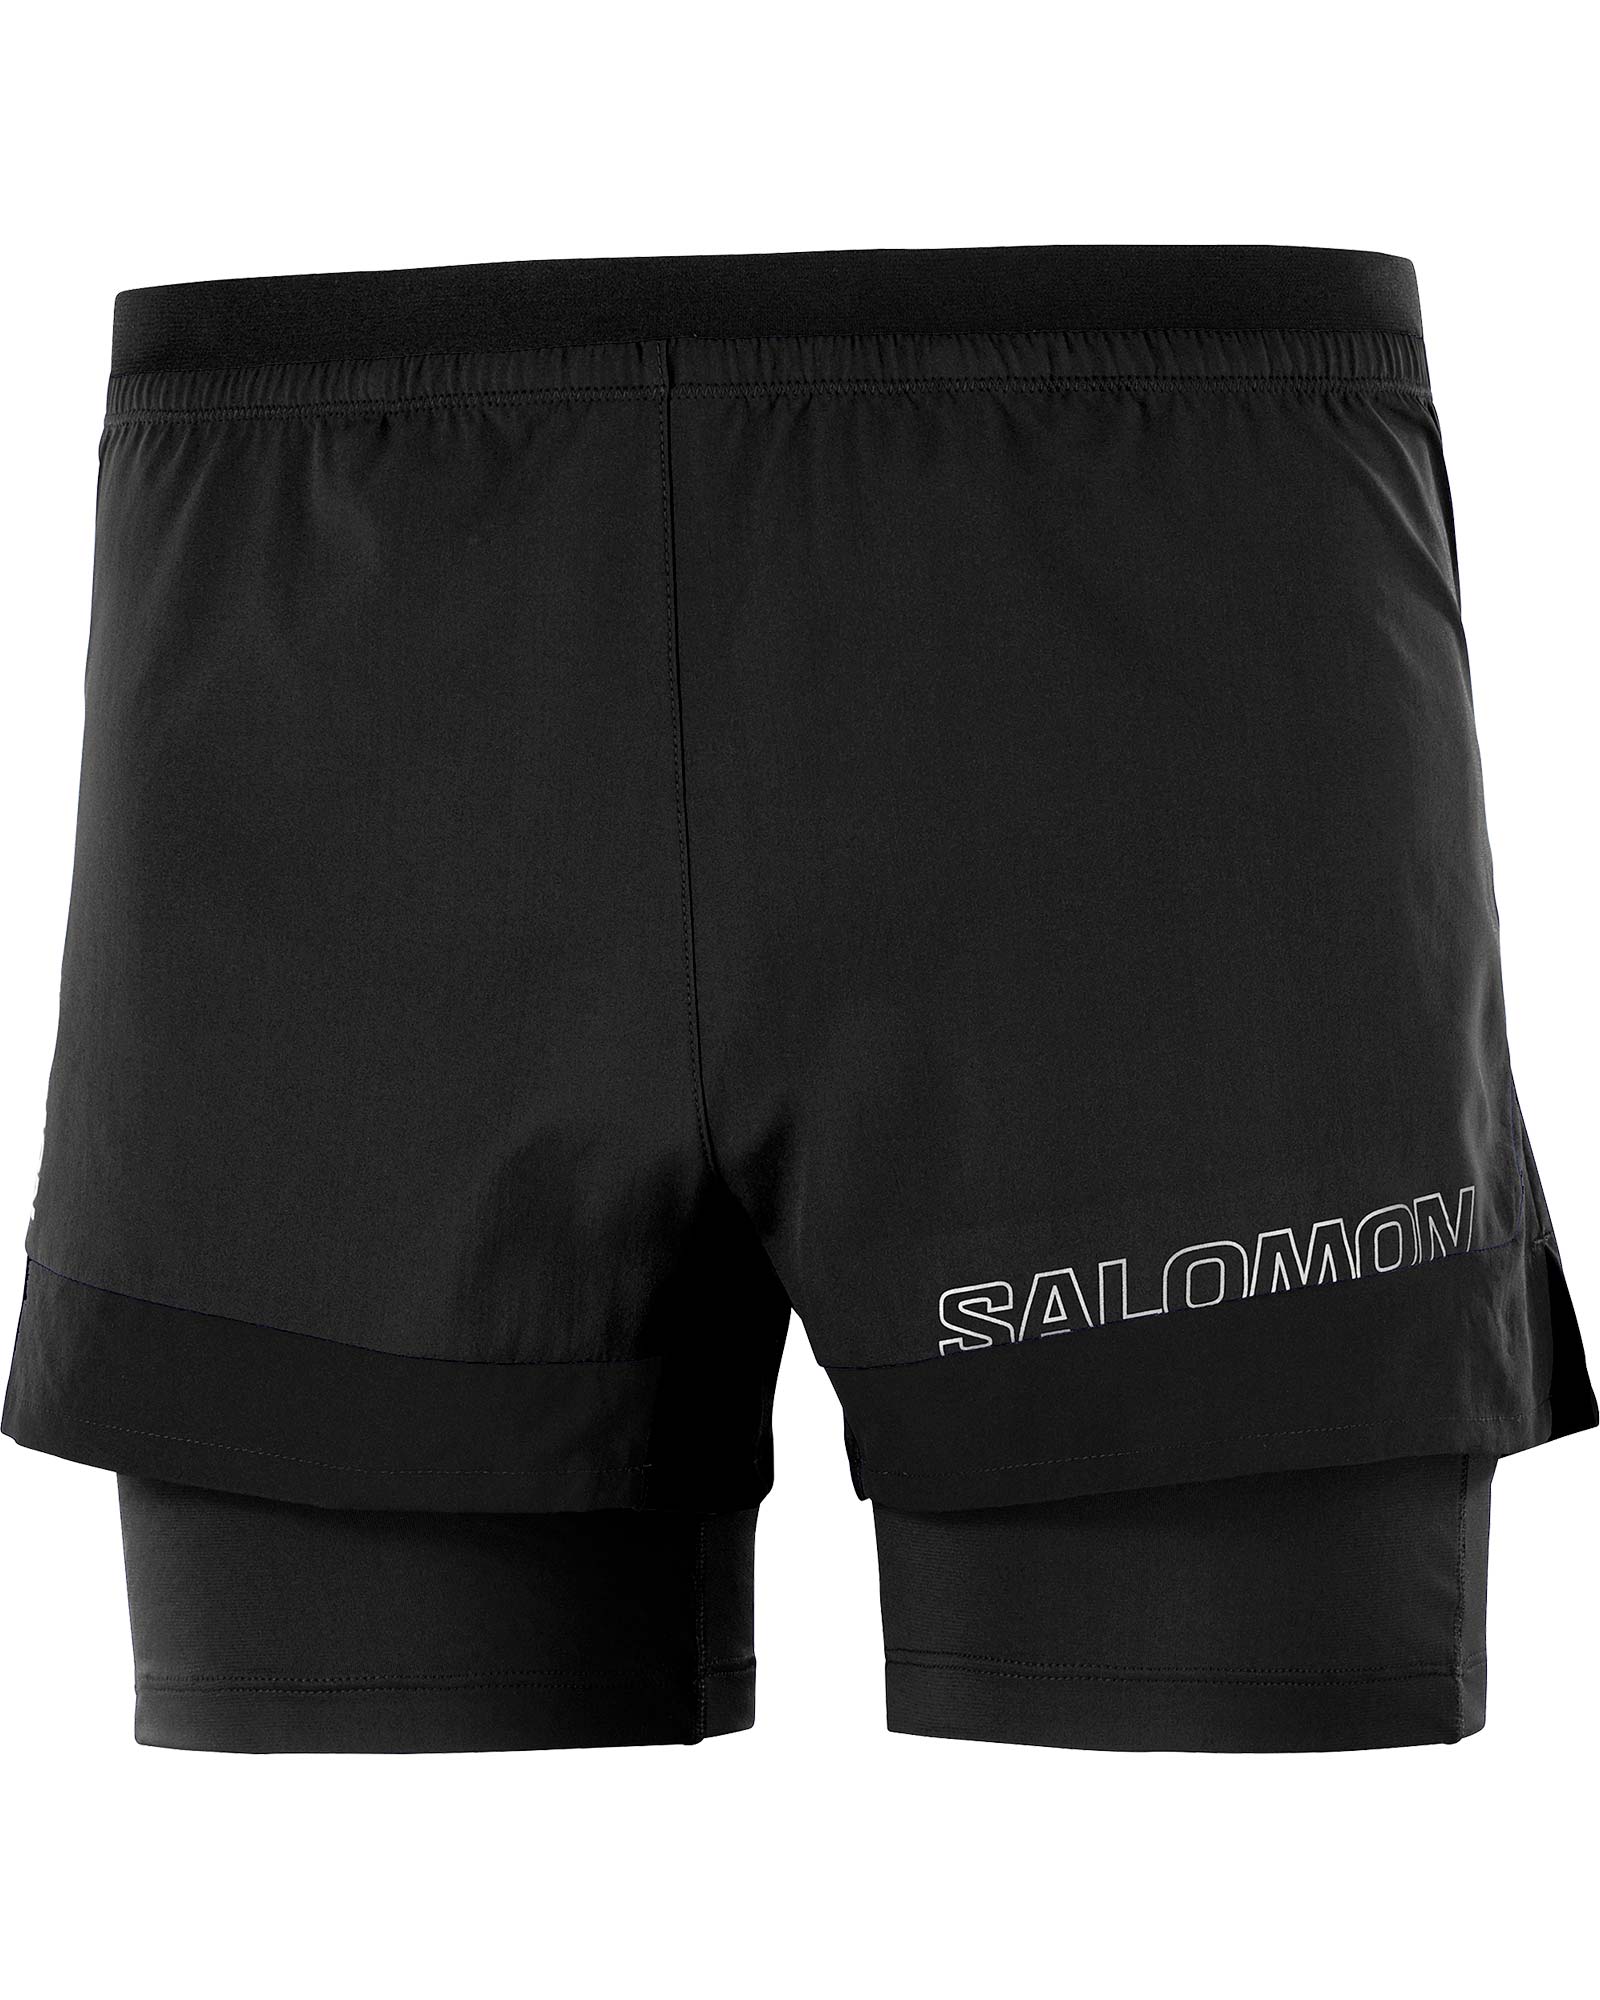 Salomon Men’s Cross 2in1 Shorts 0